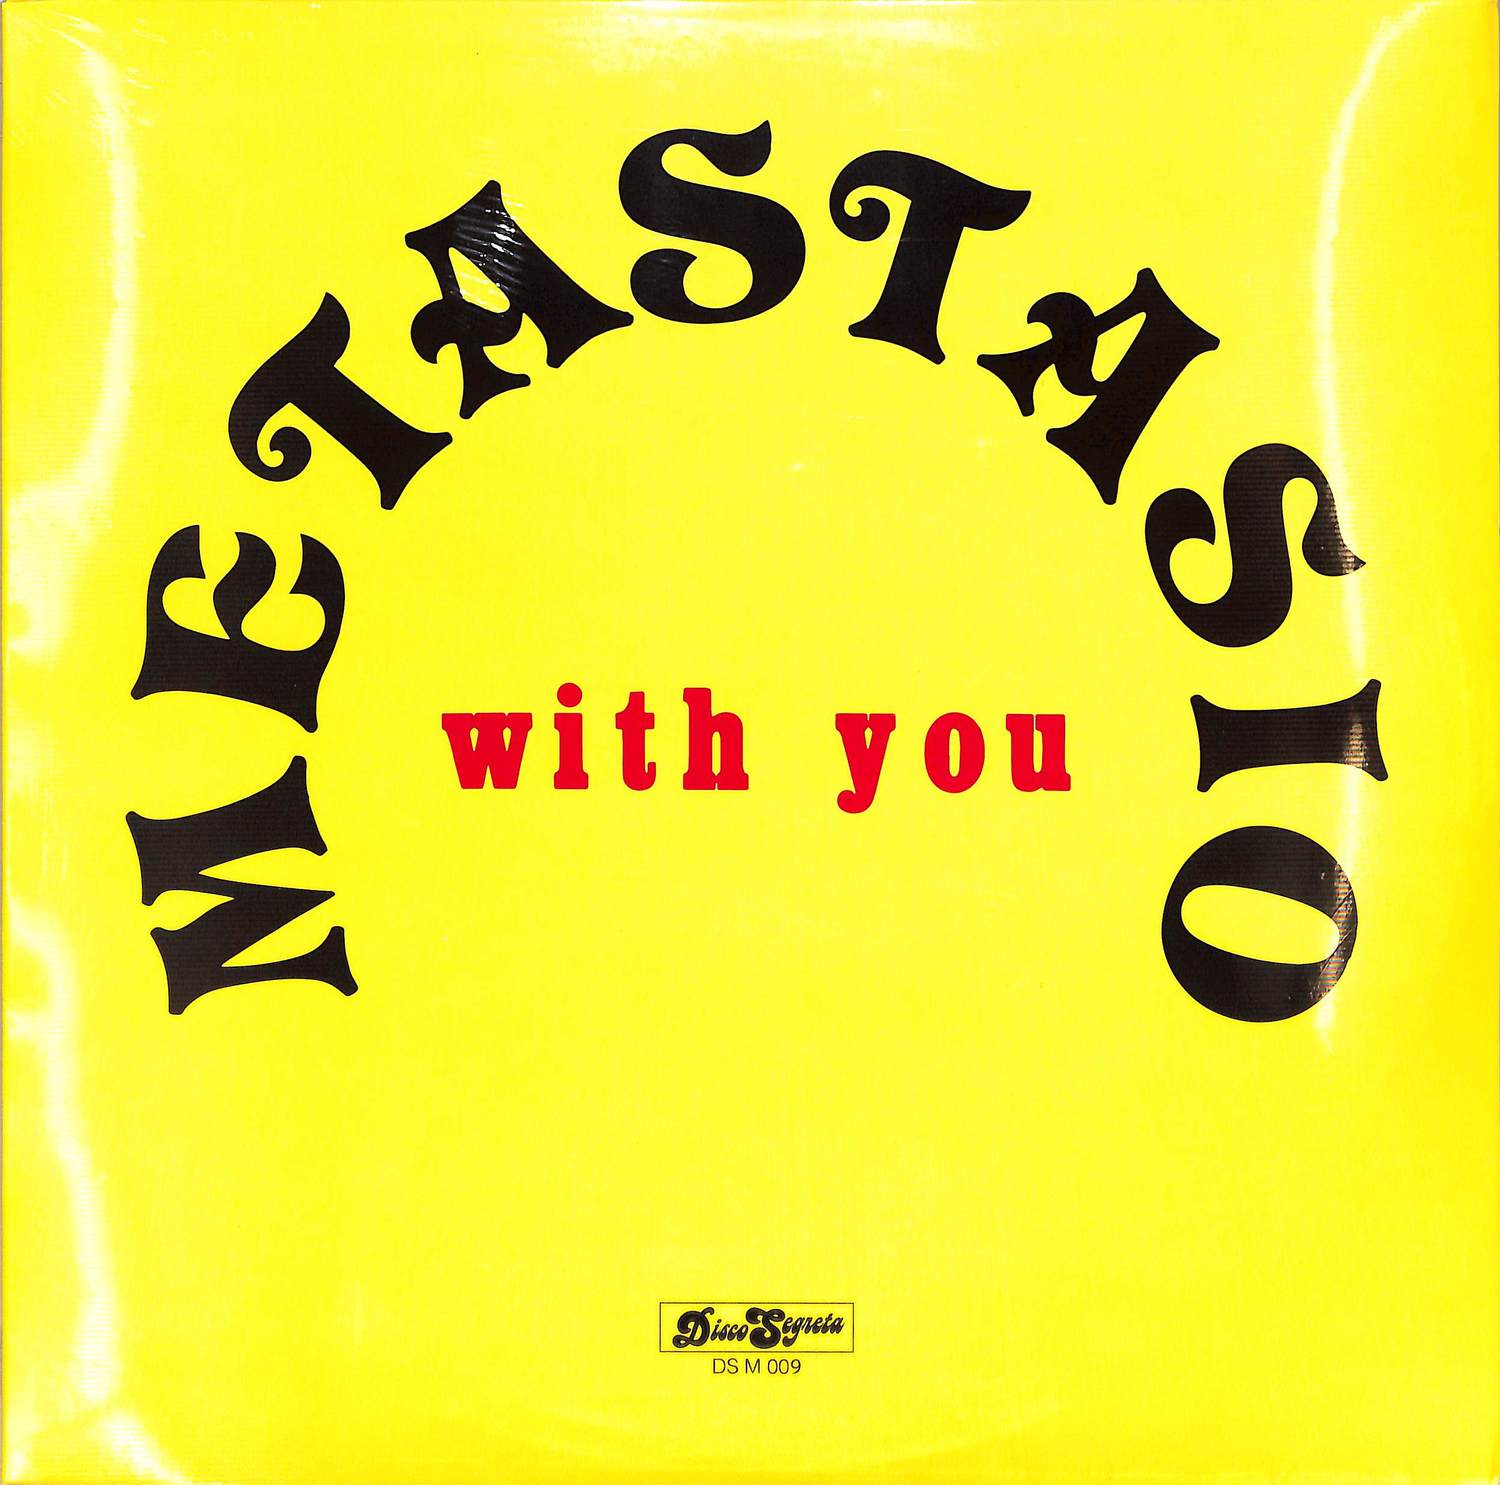 Metastasio - WITH YOU